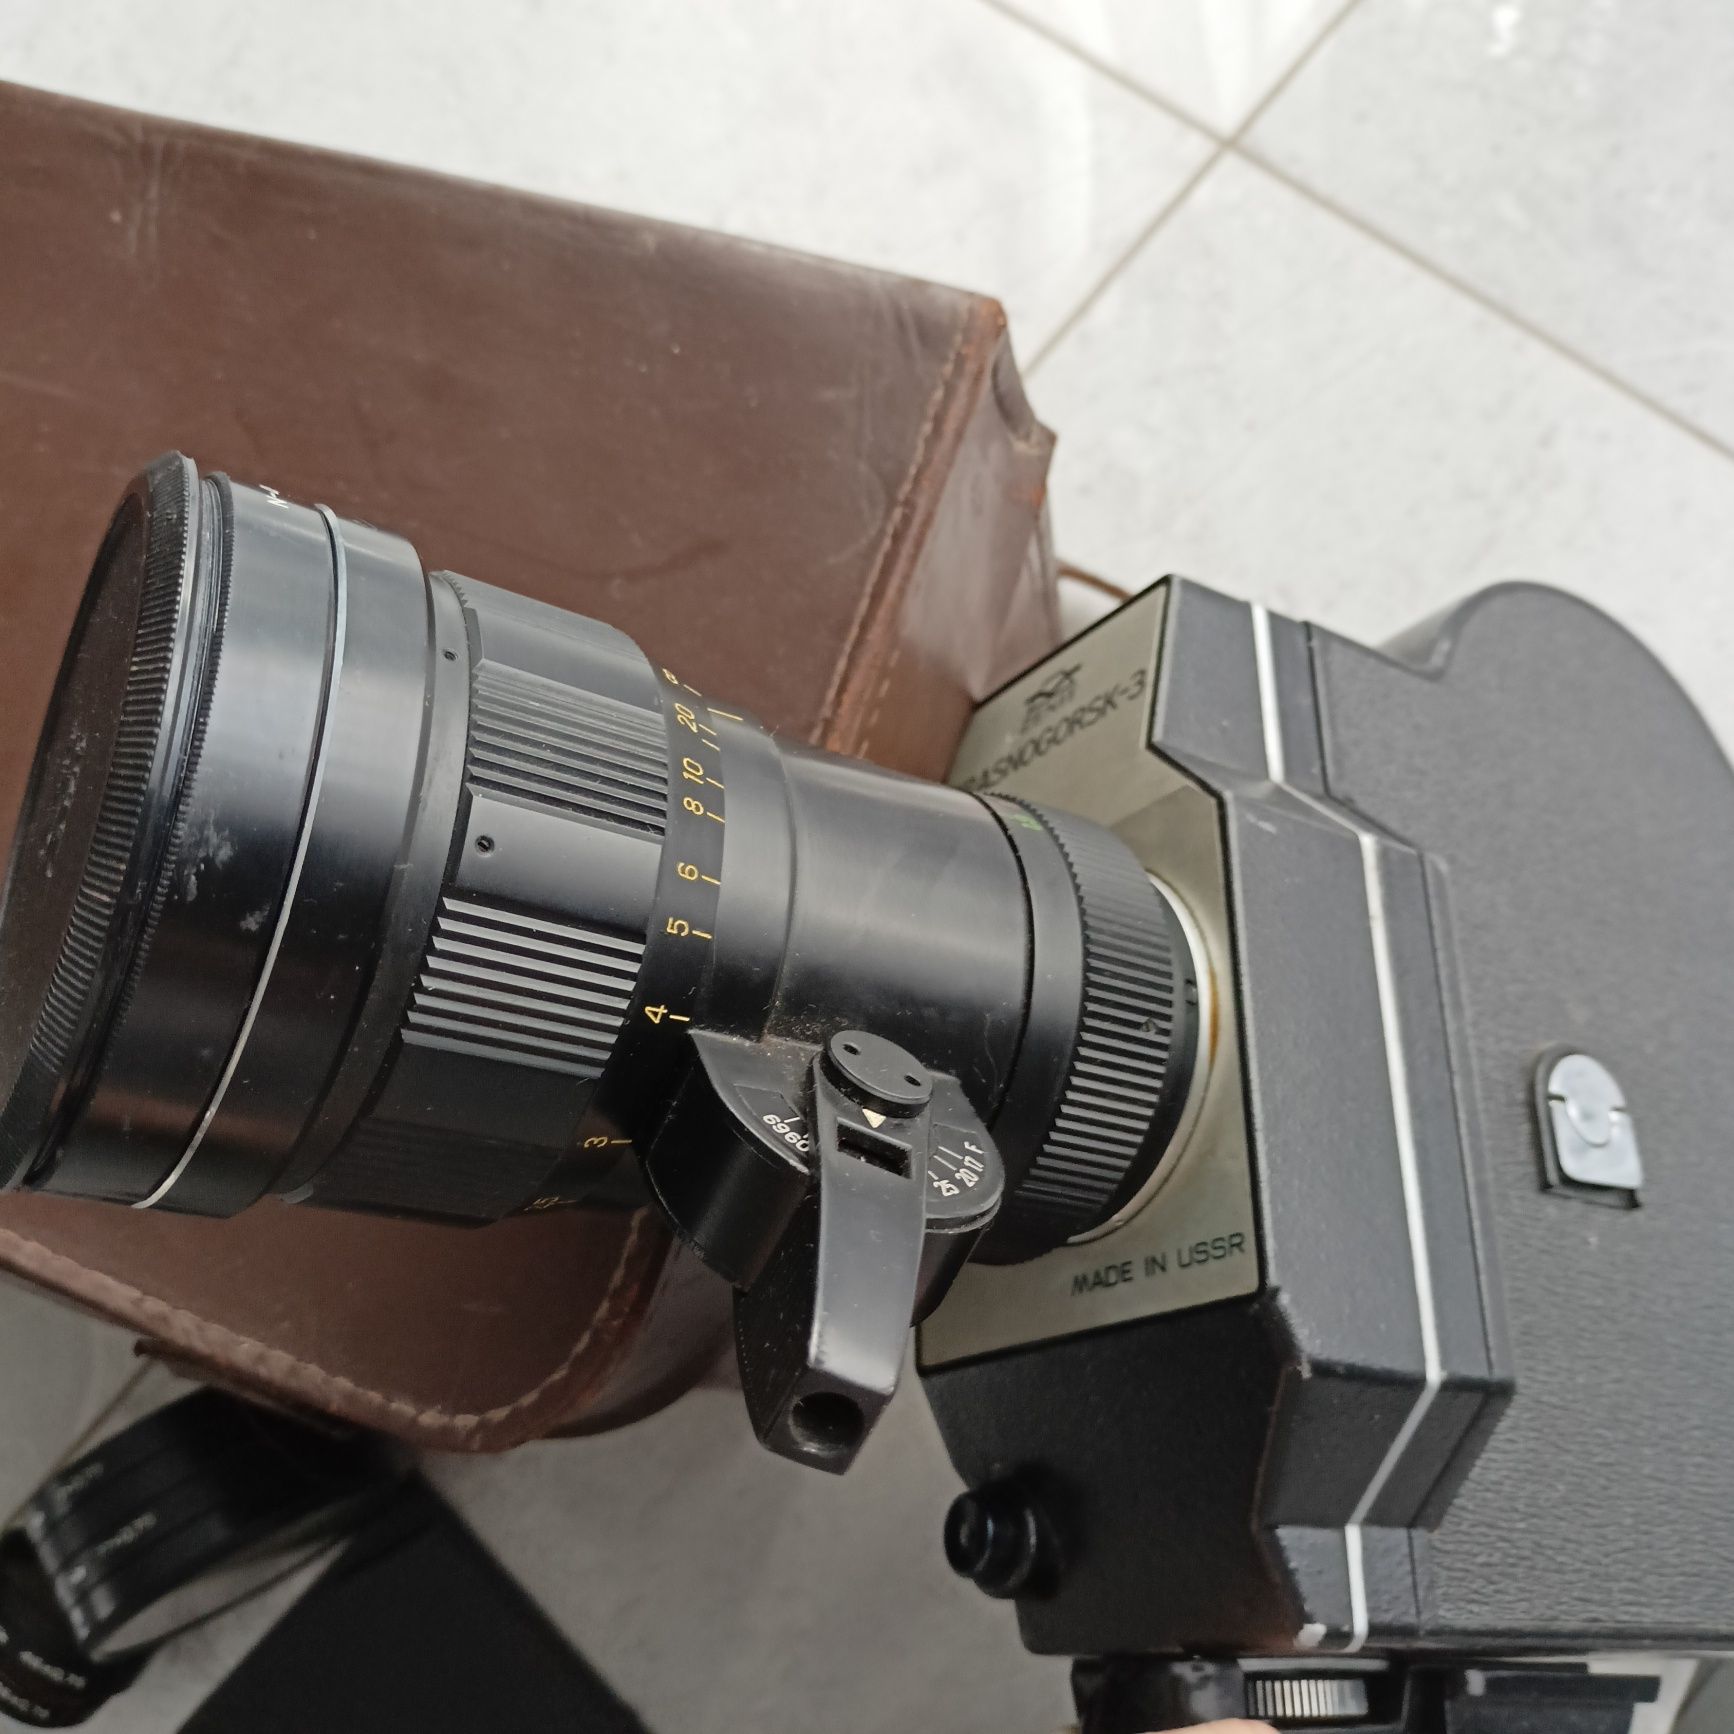 Kamera analogowa Zenit krasnogorsk -3